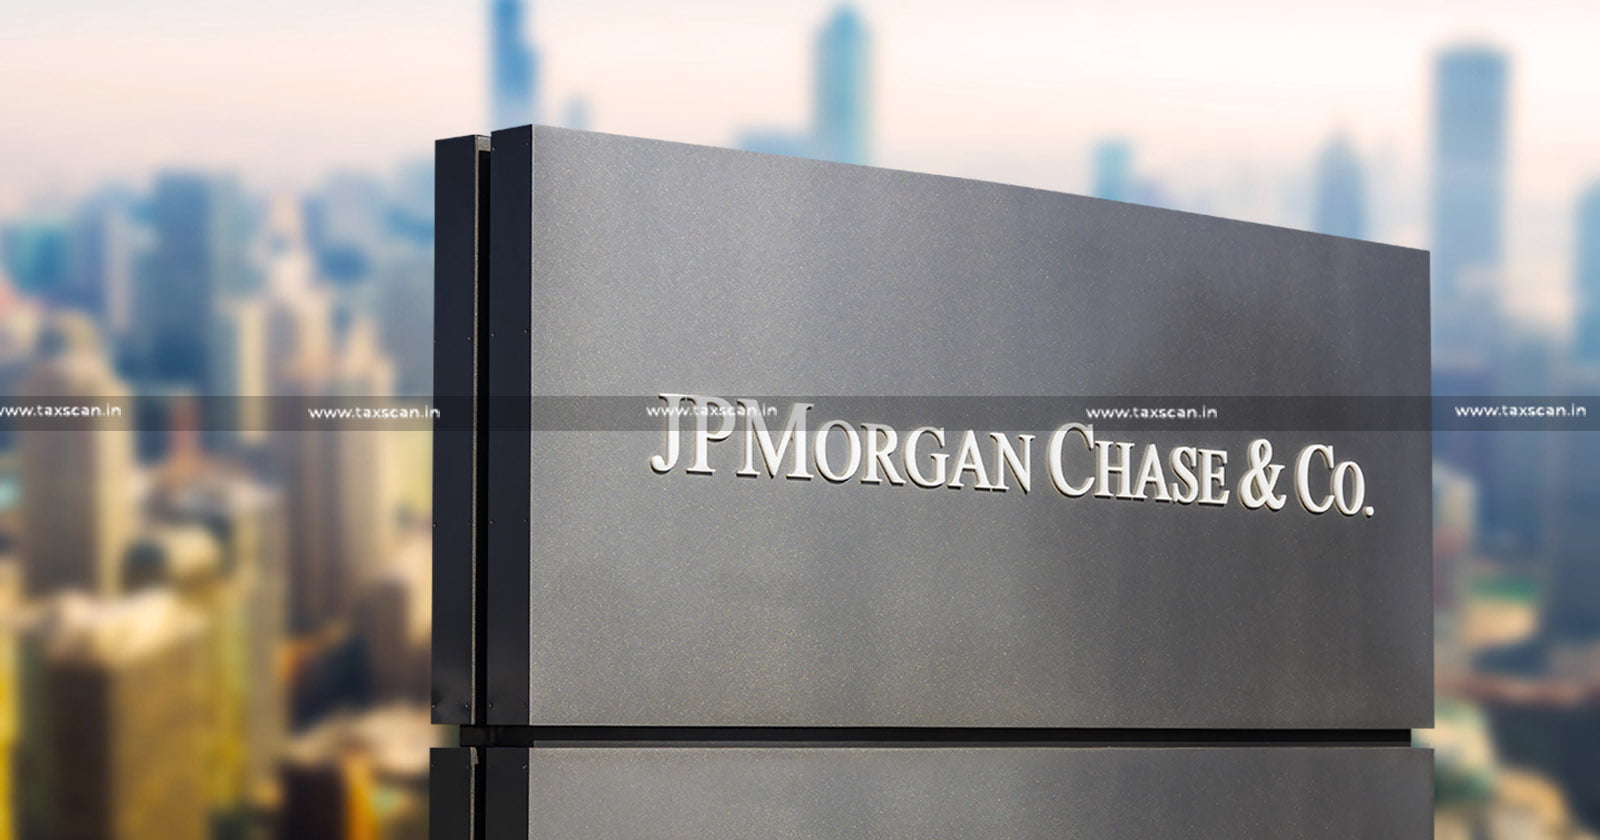 Vacancy in JPMorgan - CA - JPMorgan - opportunity in JPMORGAN - Jobs in JPMorgan - jobs - TAXSCAN